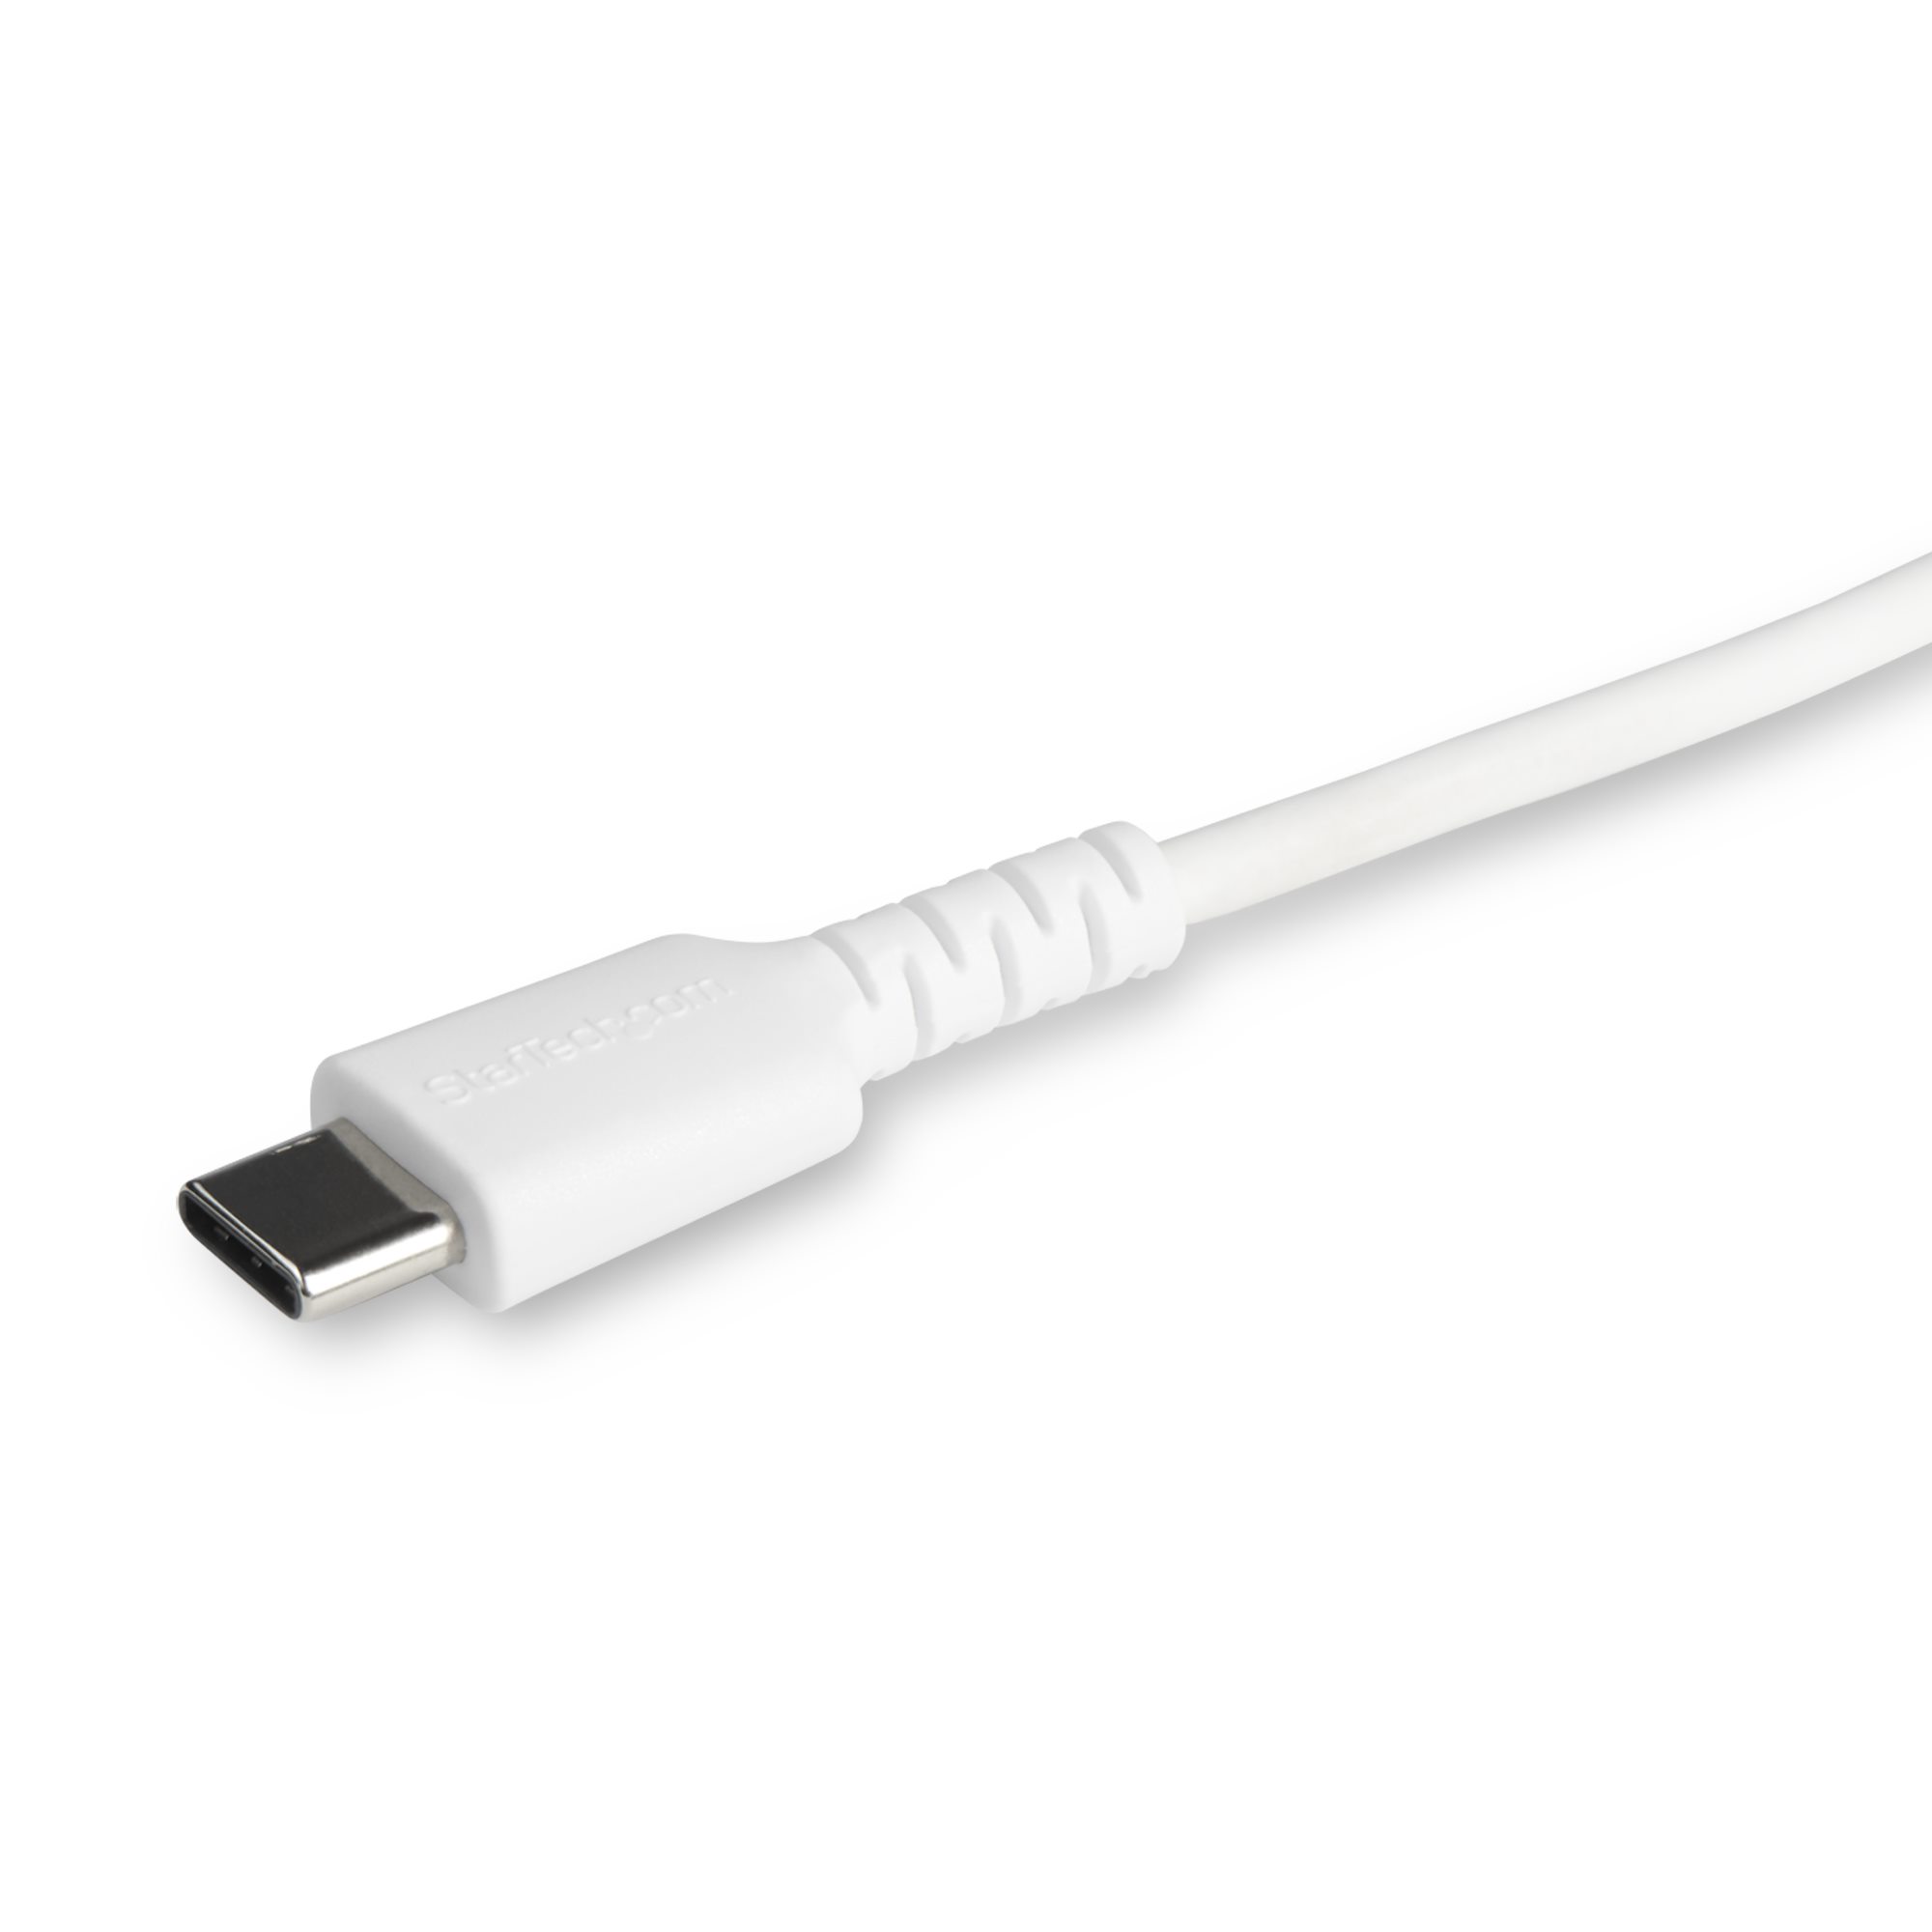 CABLE USB-C A LIGHTNING 1M / PARA IPHONE-IPAD-APPLE / MQUE2ZM / WHITE -  NANOTECH MARKET